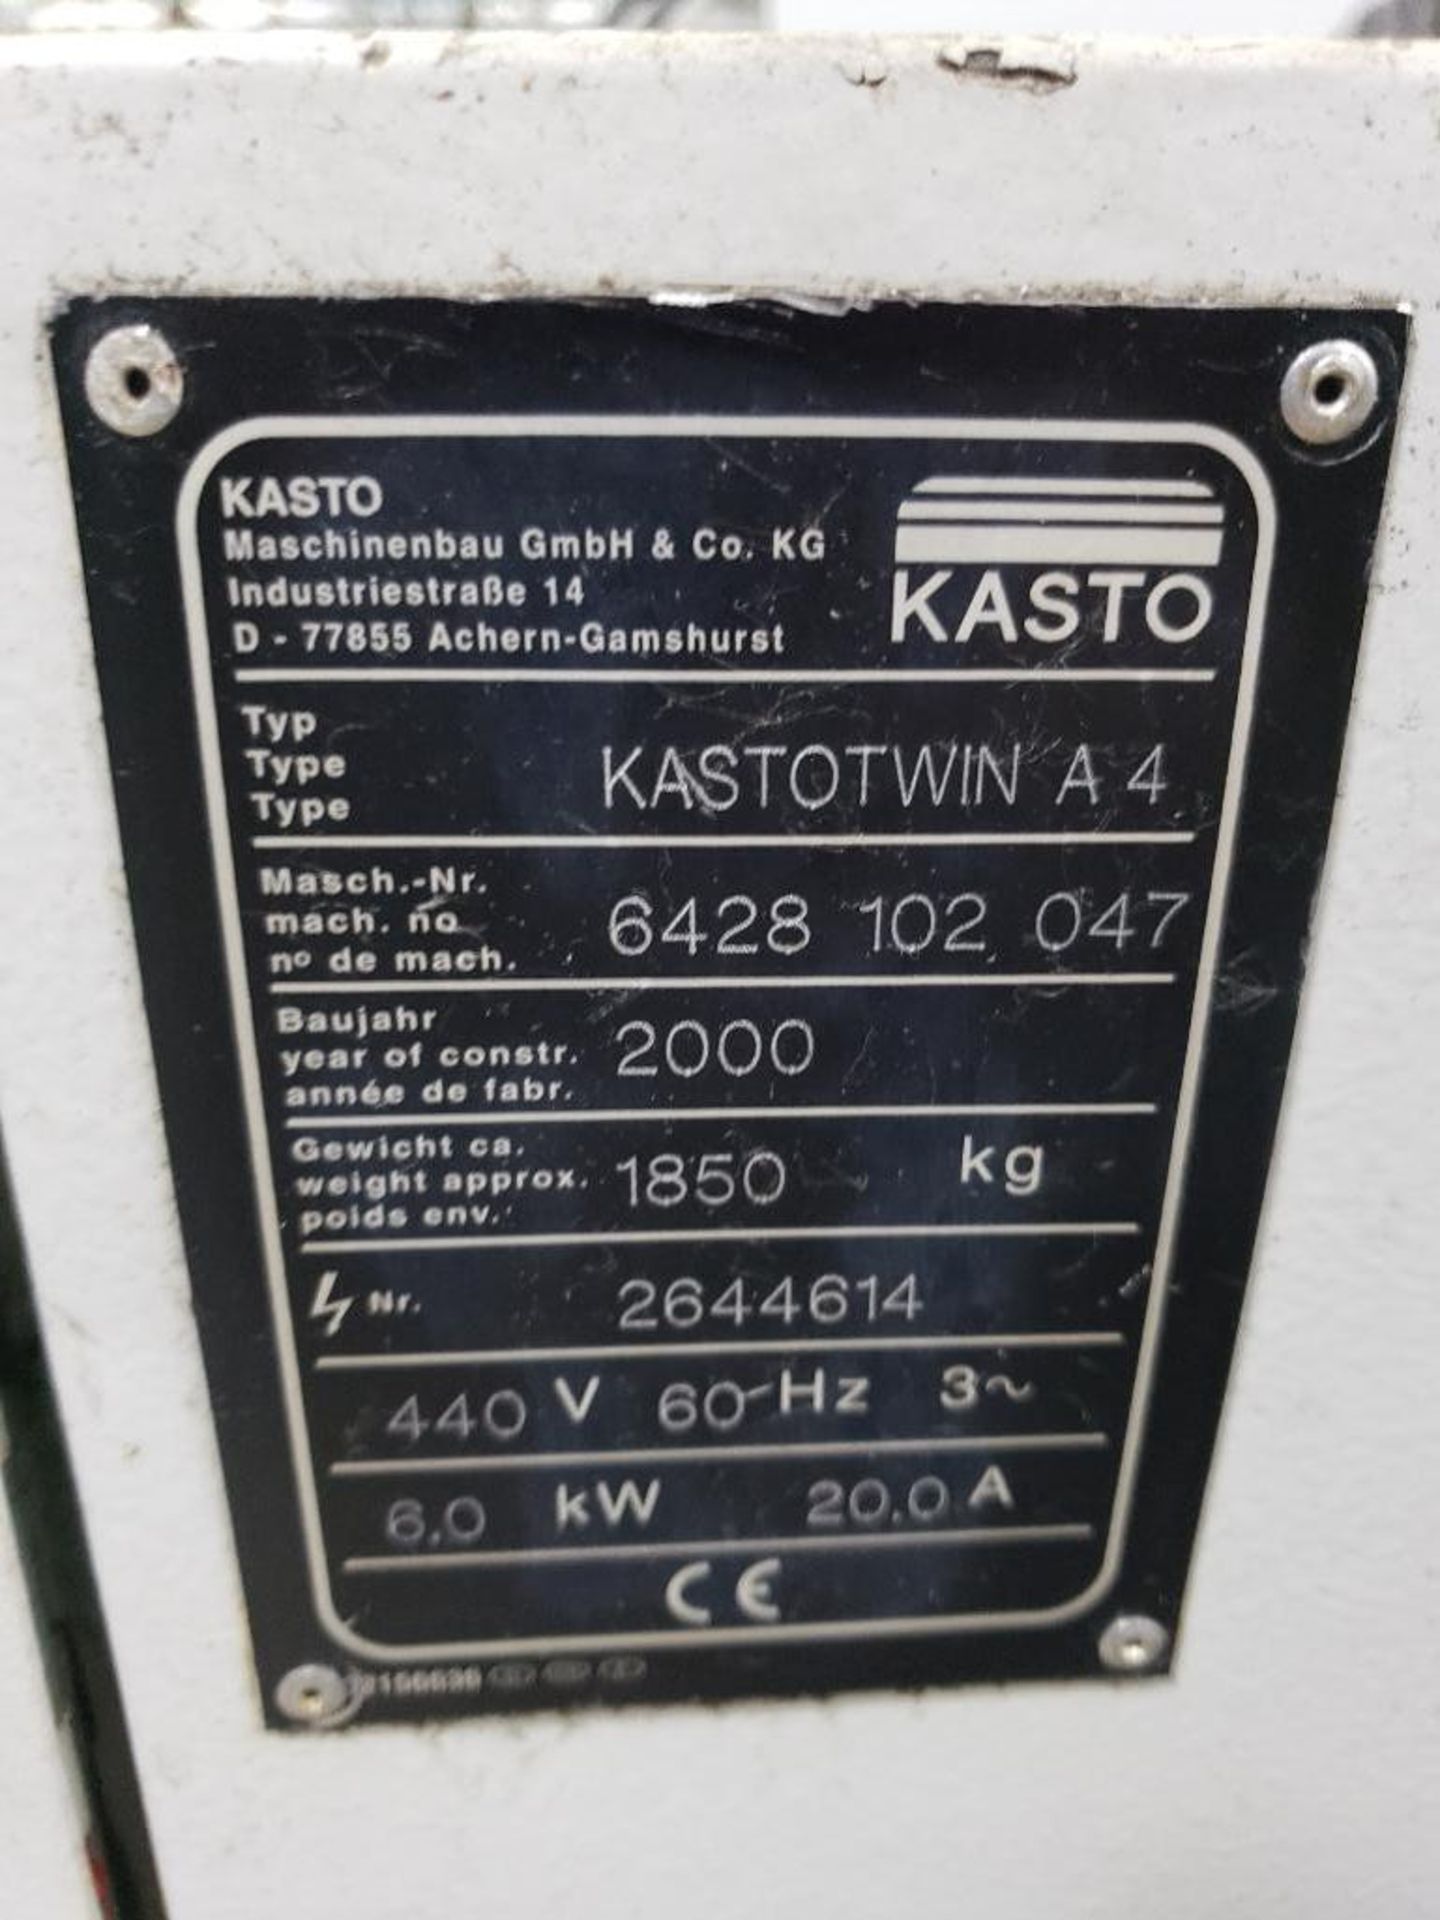 Kasto horizontal CNC band saw Model Kastotwin A4, 3 phase 440v, Mfg year 2000. Serial # 6428102047. - Image 19 of 32